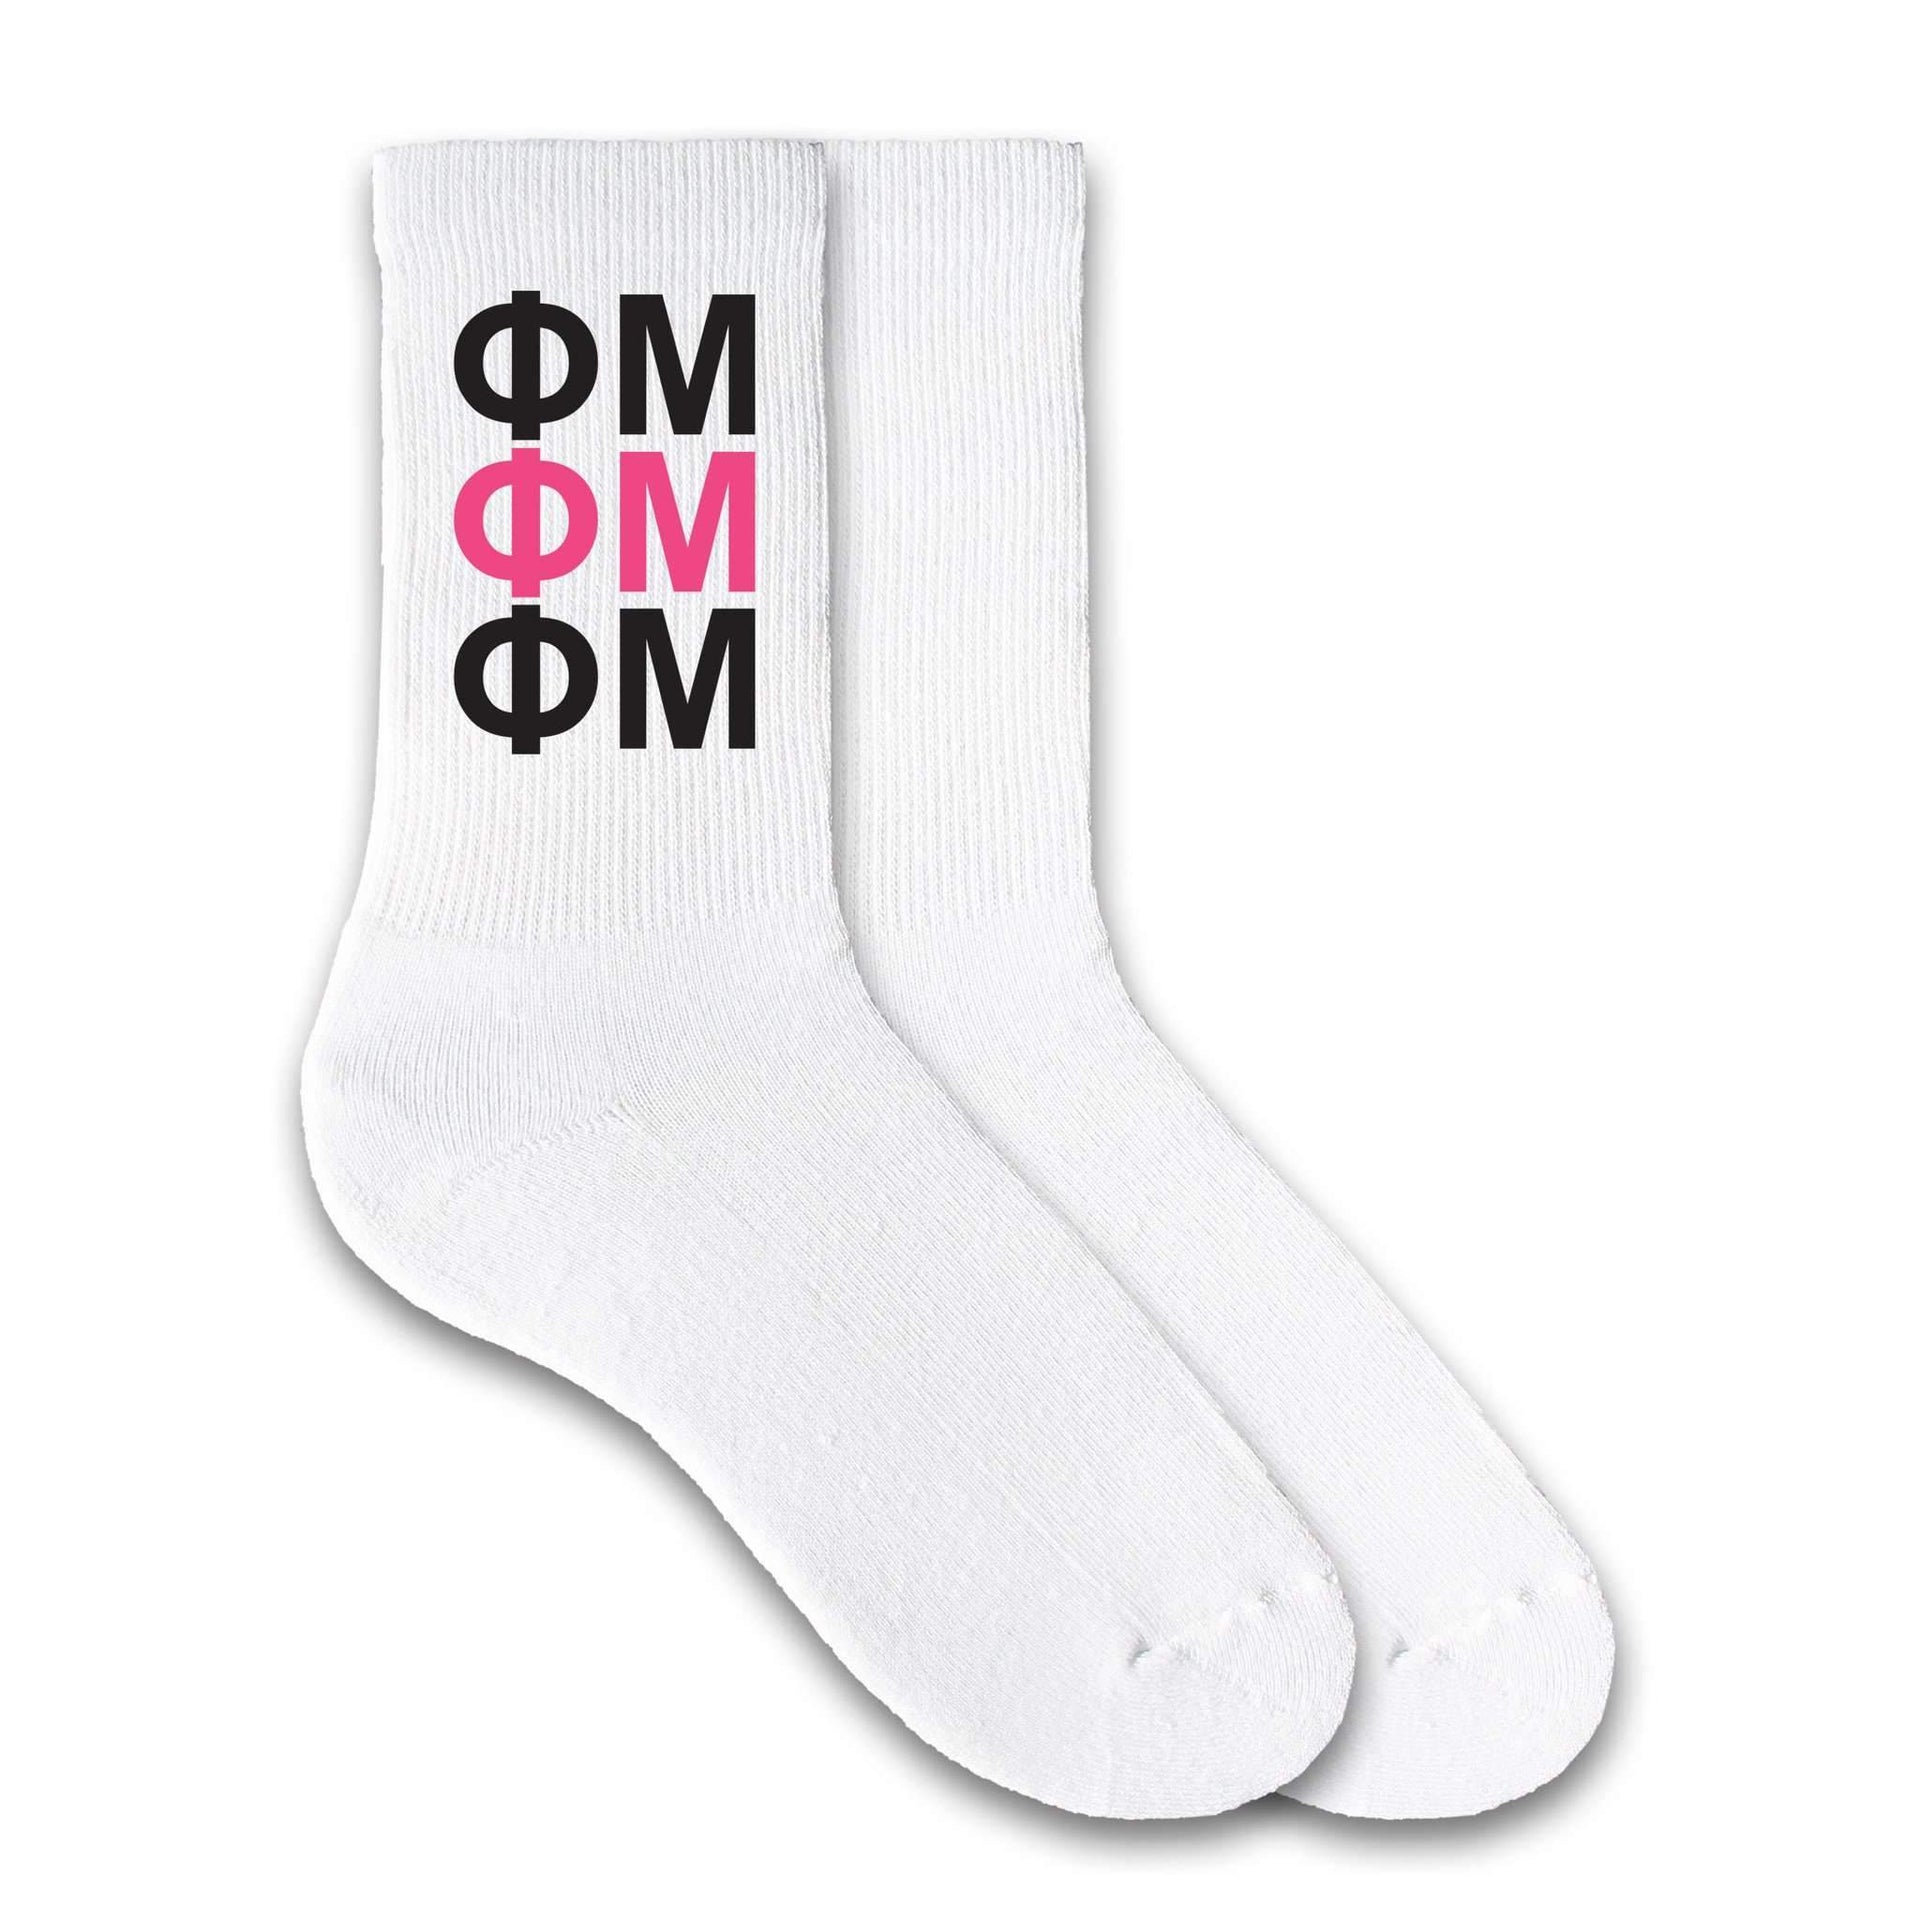 Phi Mu repeating sorority letters custom printed on white cotton crew socks